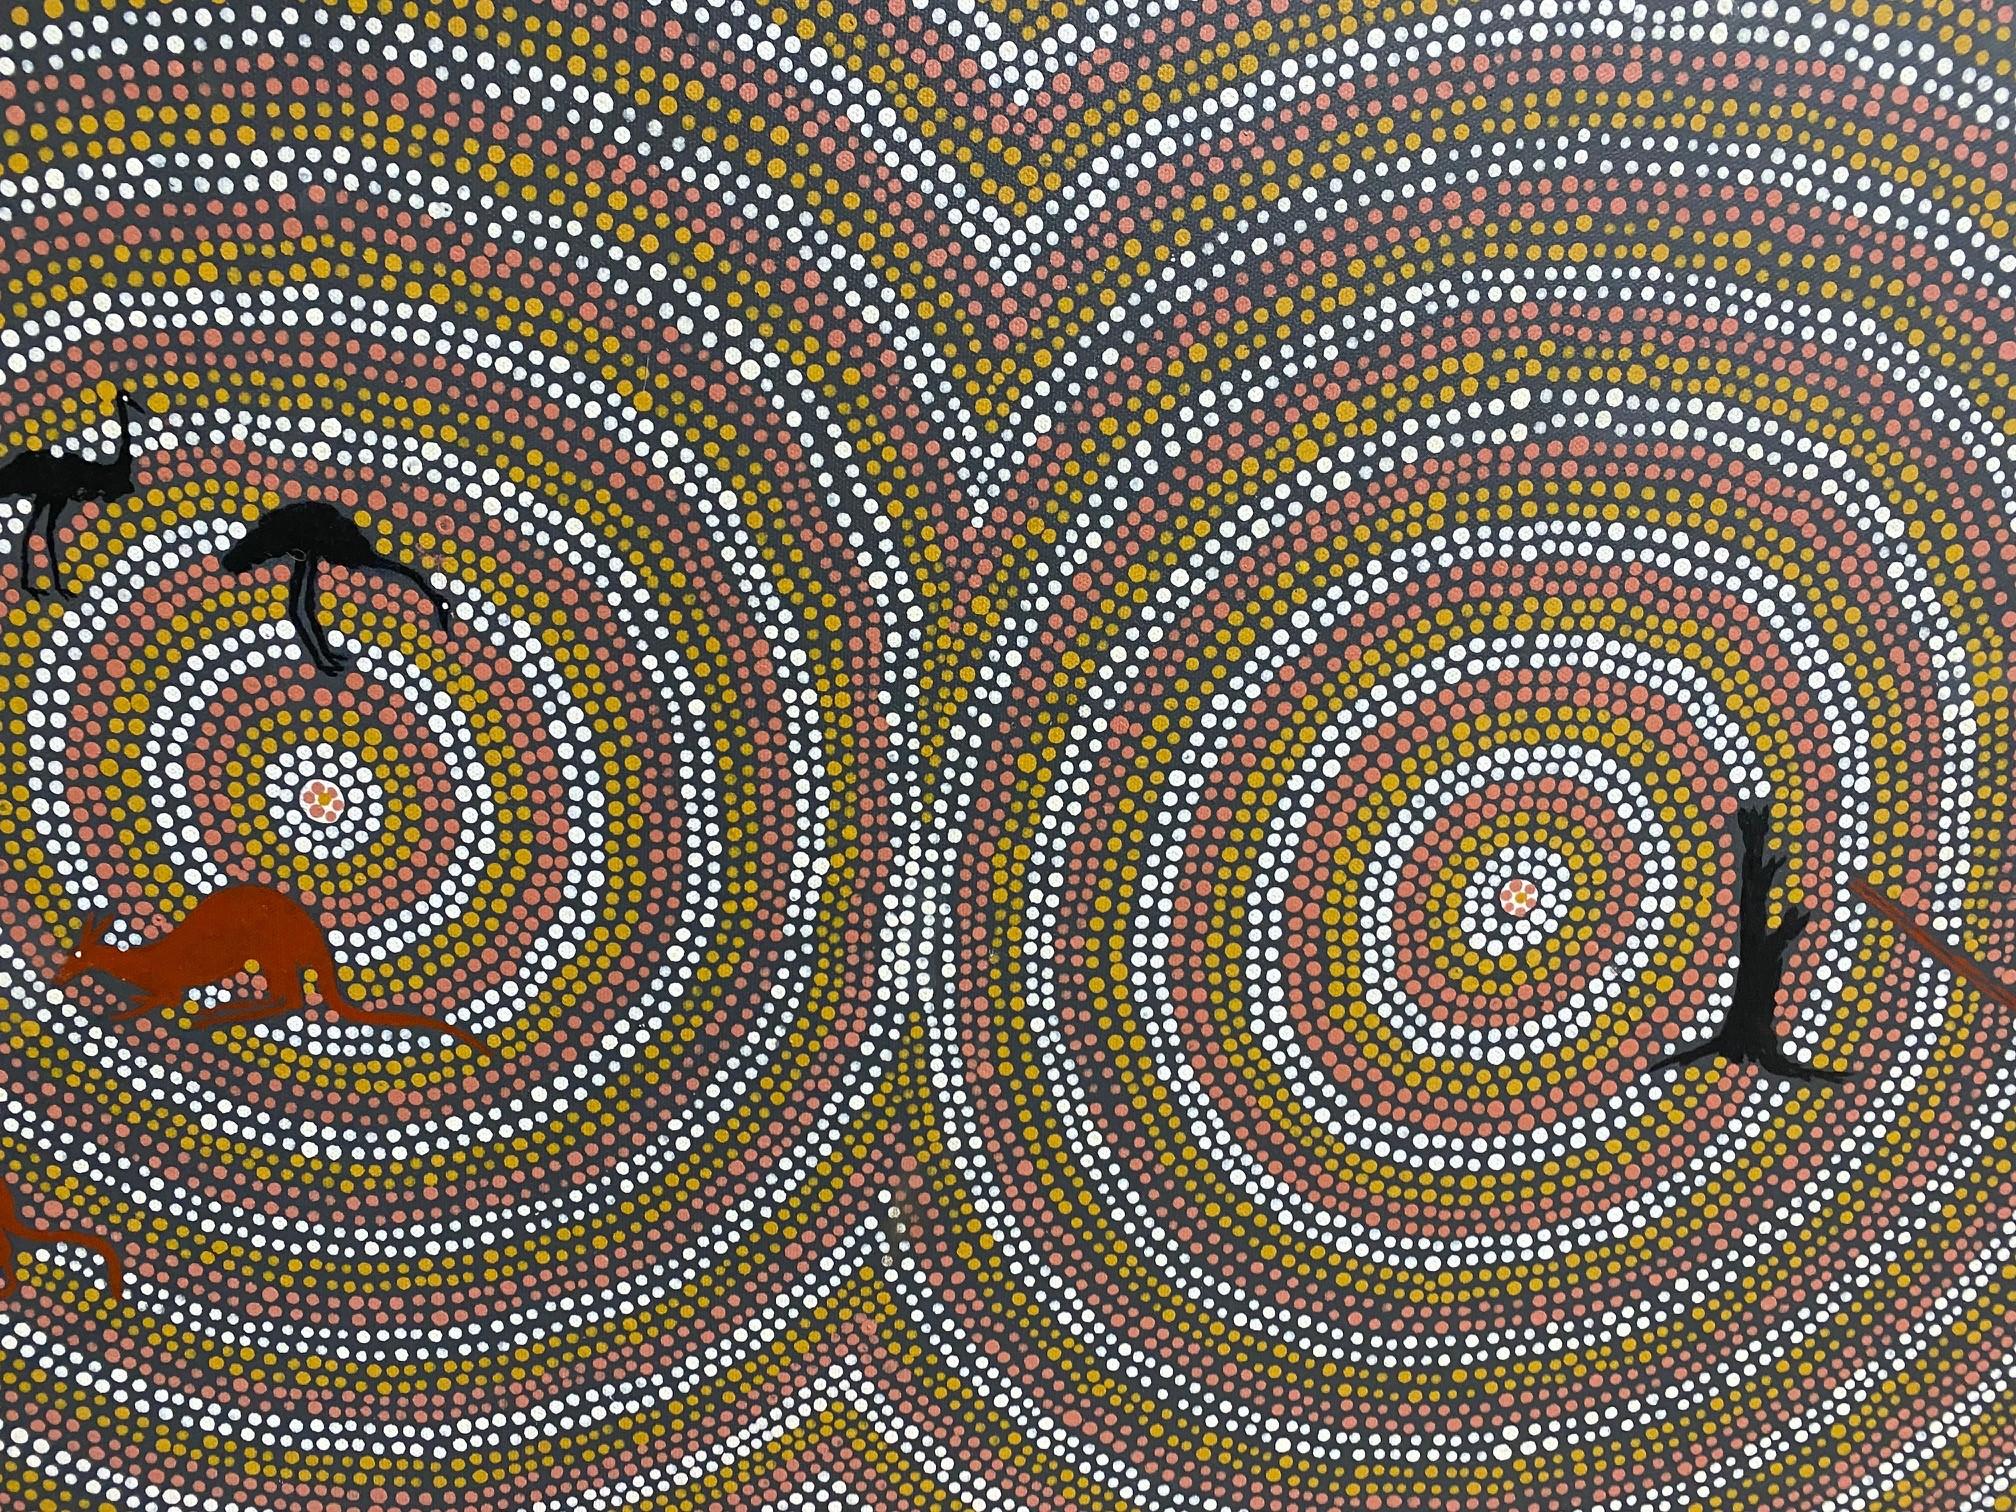 Australian Aboriginal Art Barbara Charles Napaltjarri Hunting Dreaming Painting In Good Condition For Sale In Studio City, CA